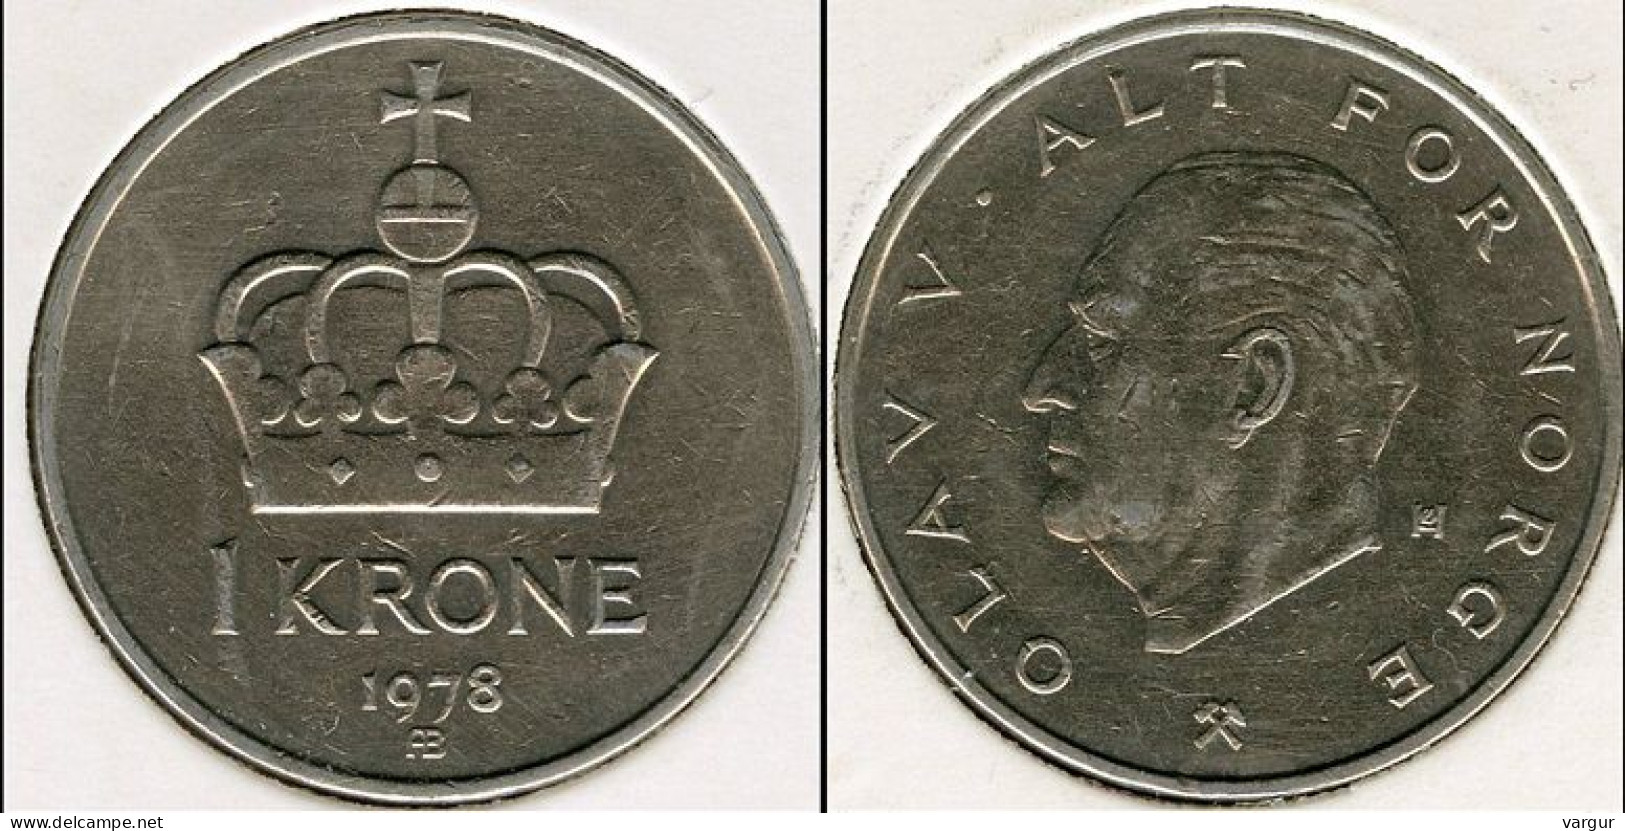 NORWAY 1978. 1 Krone Coin. Km#419, XF - Norway